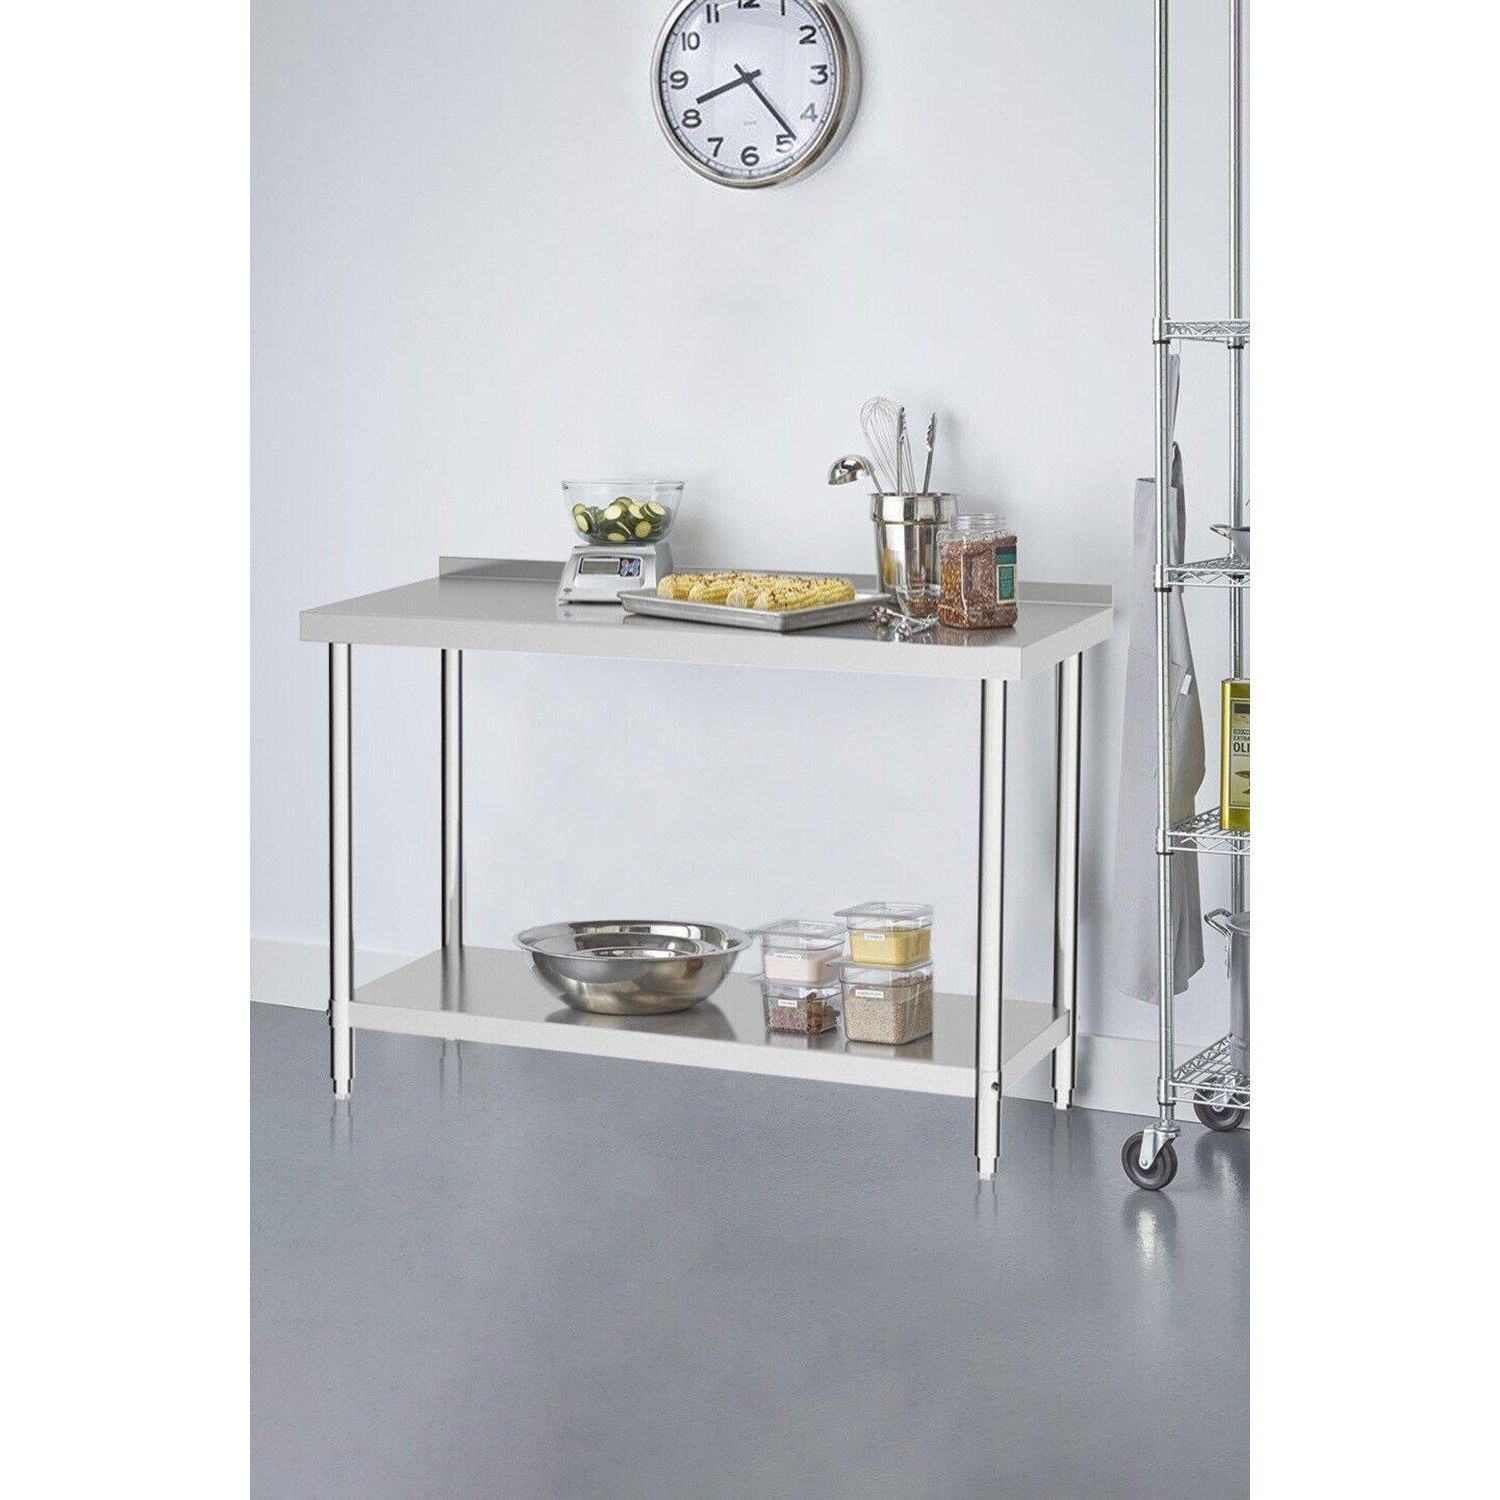 150cm Stainless Steel Kitchen Prep & Work Table with Backsplash - image 1